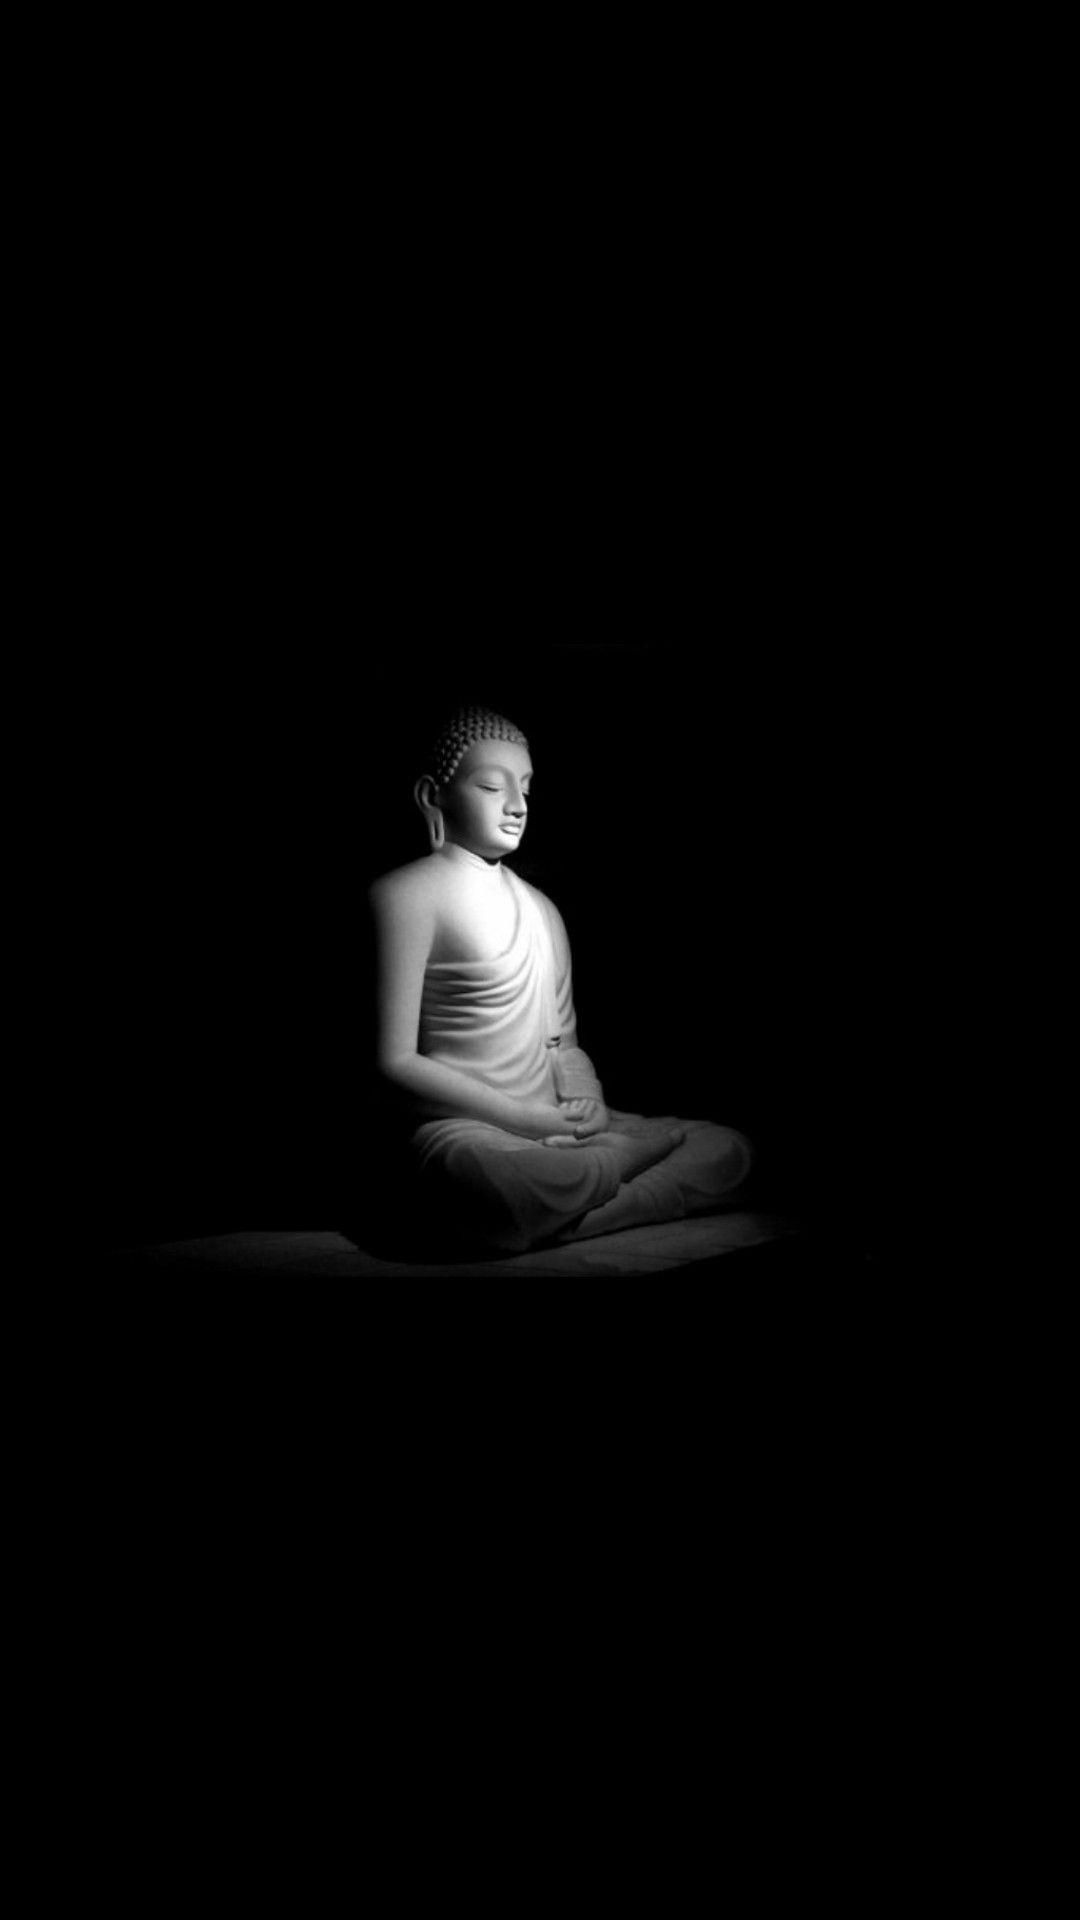 Page 11  Meditation Buddha Wallpaper Images  Free Download on Freepik